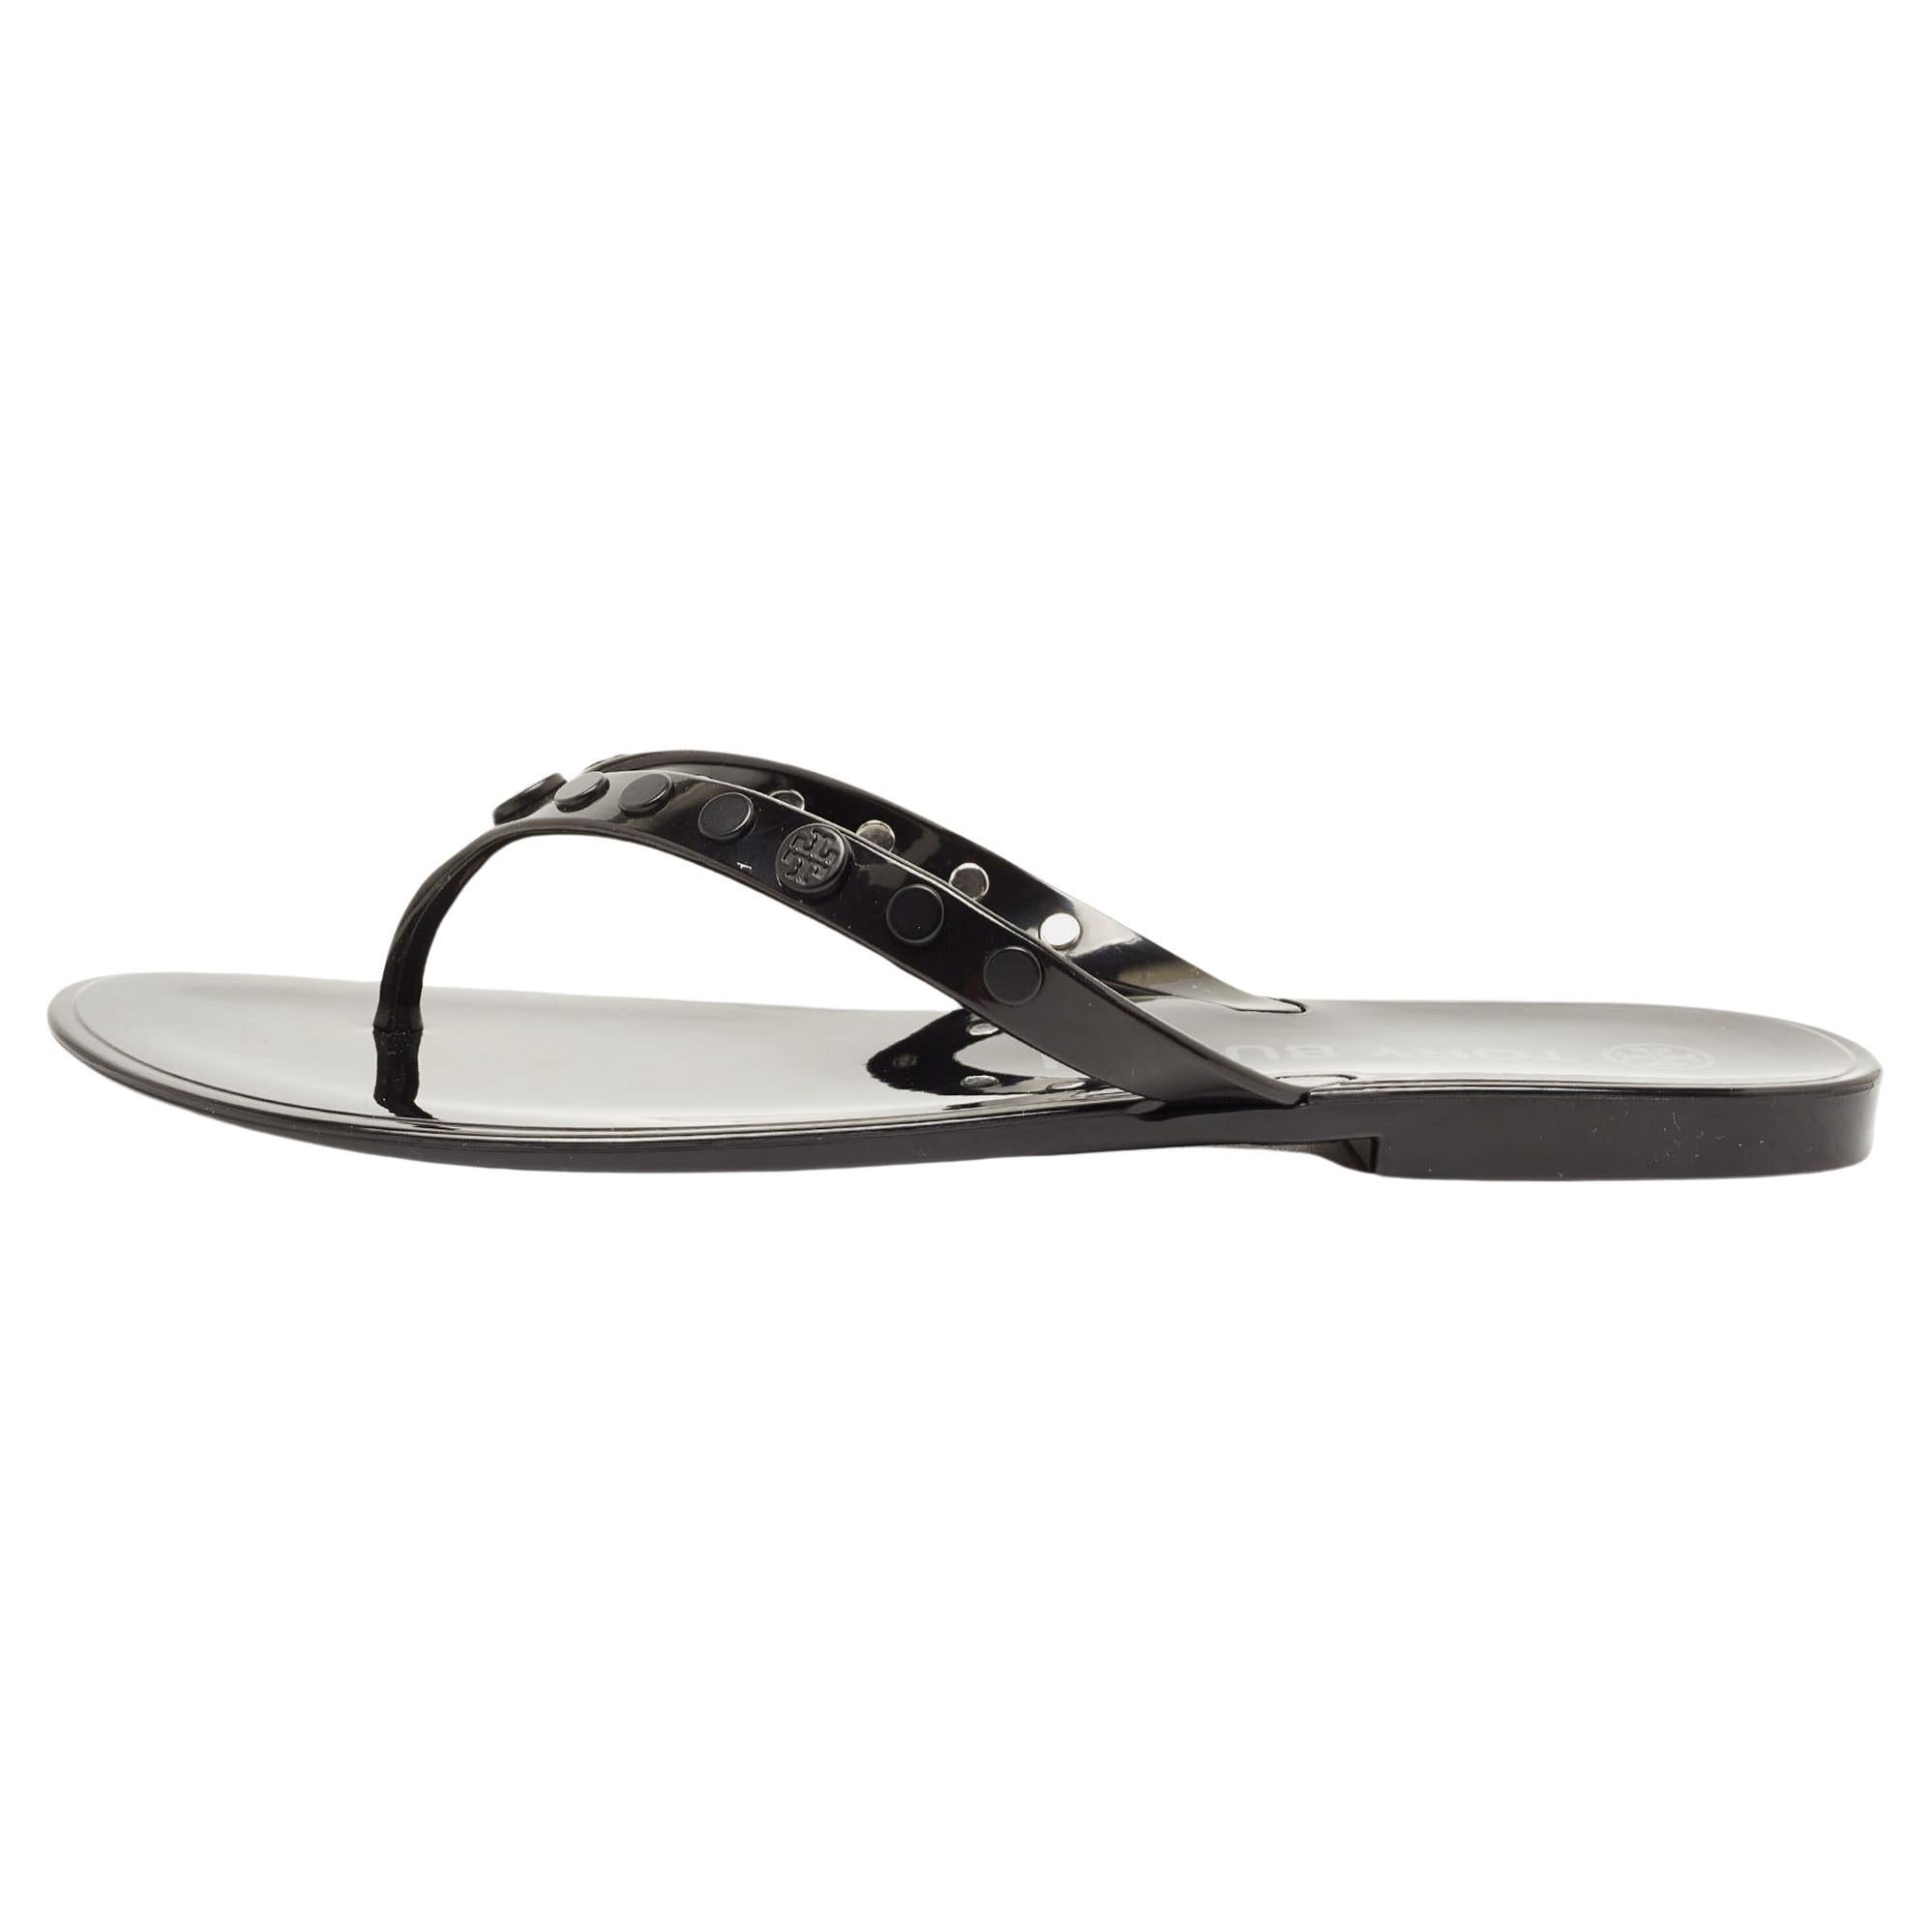 Christian LOUBOUTIN black suede and nacre heel peep toe pumps size 37 ...